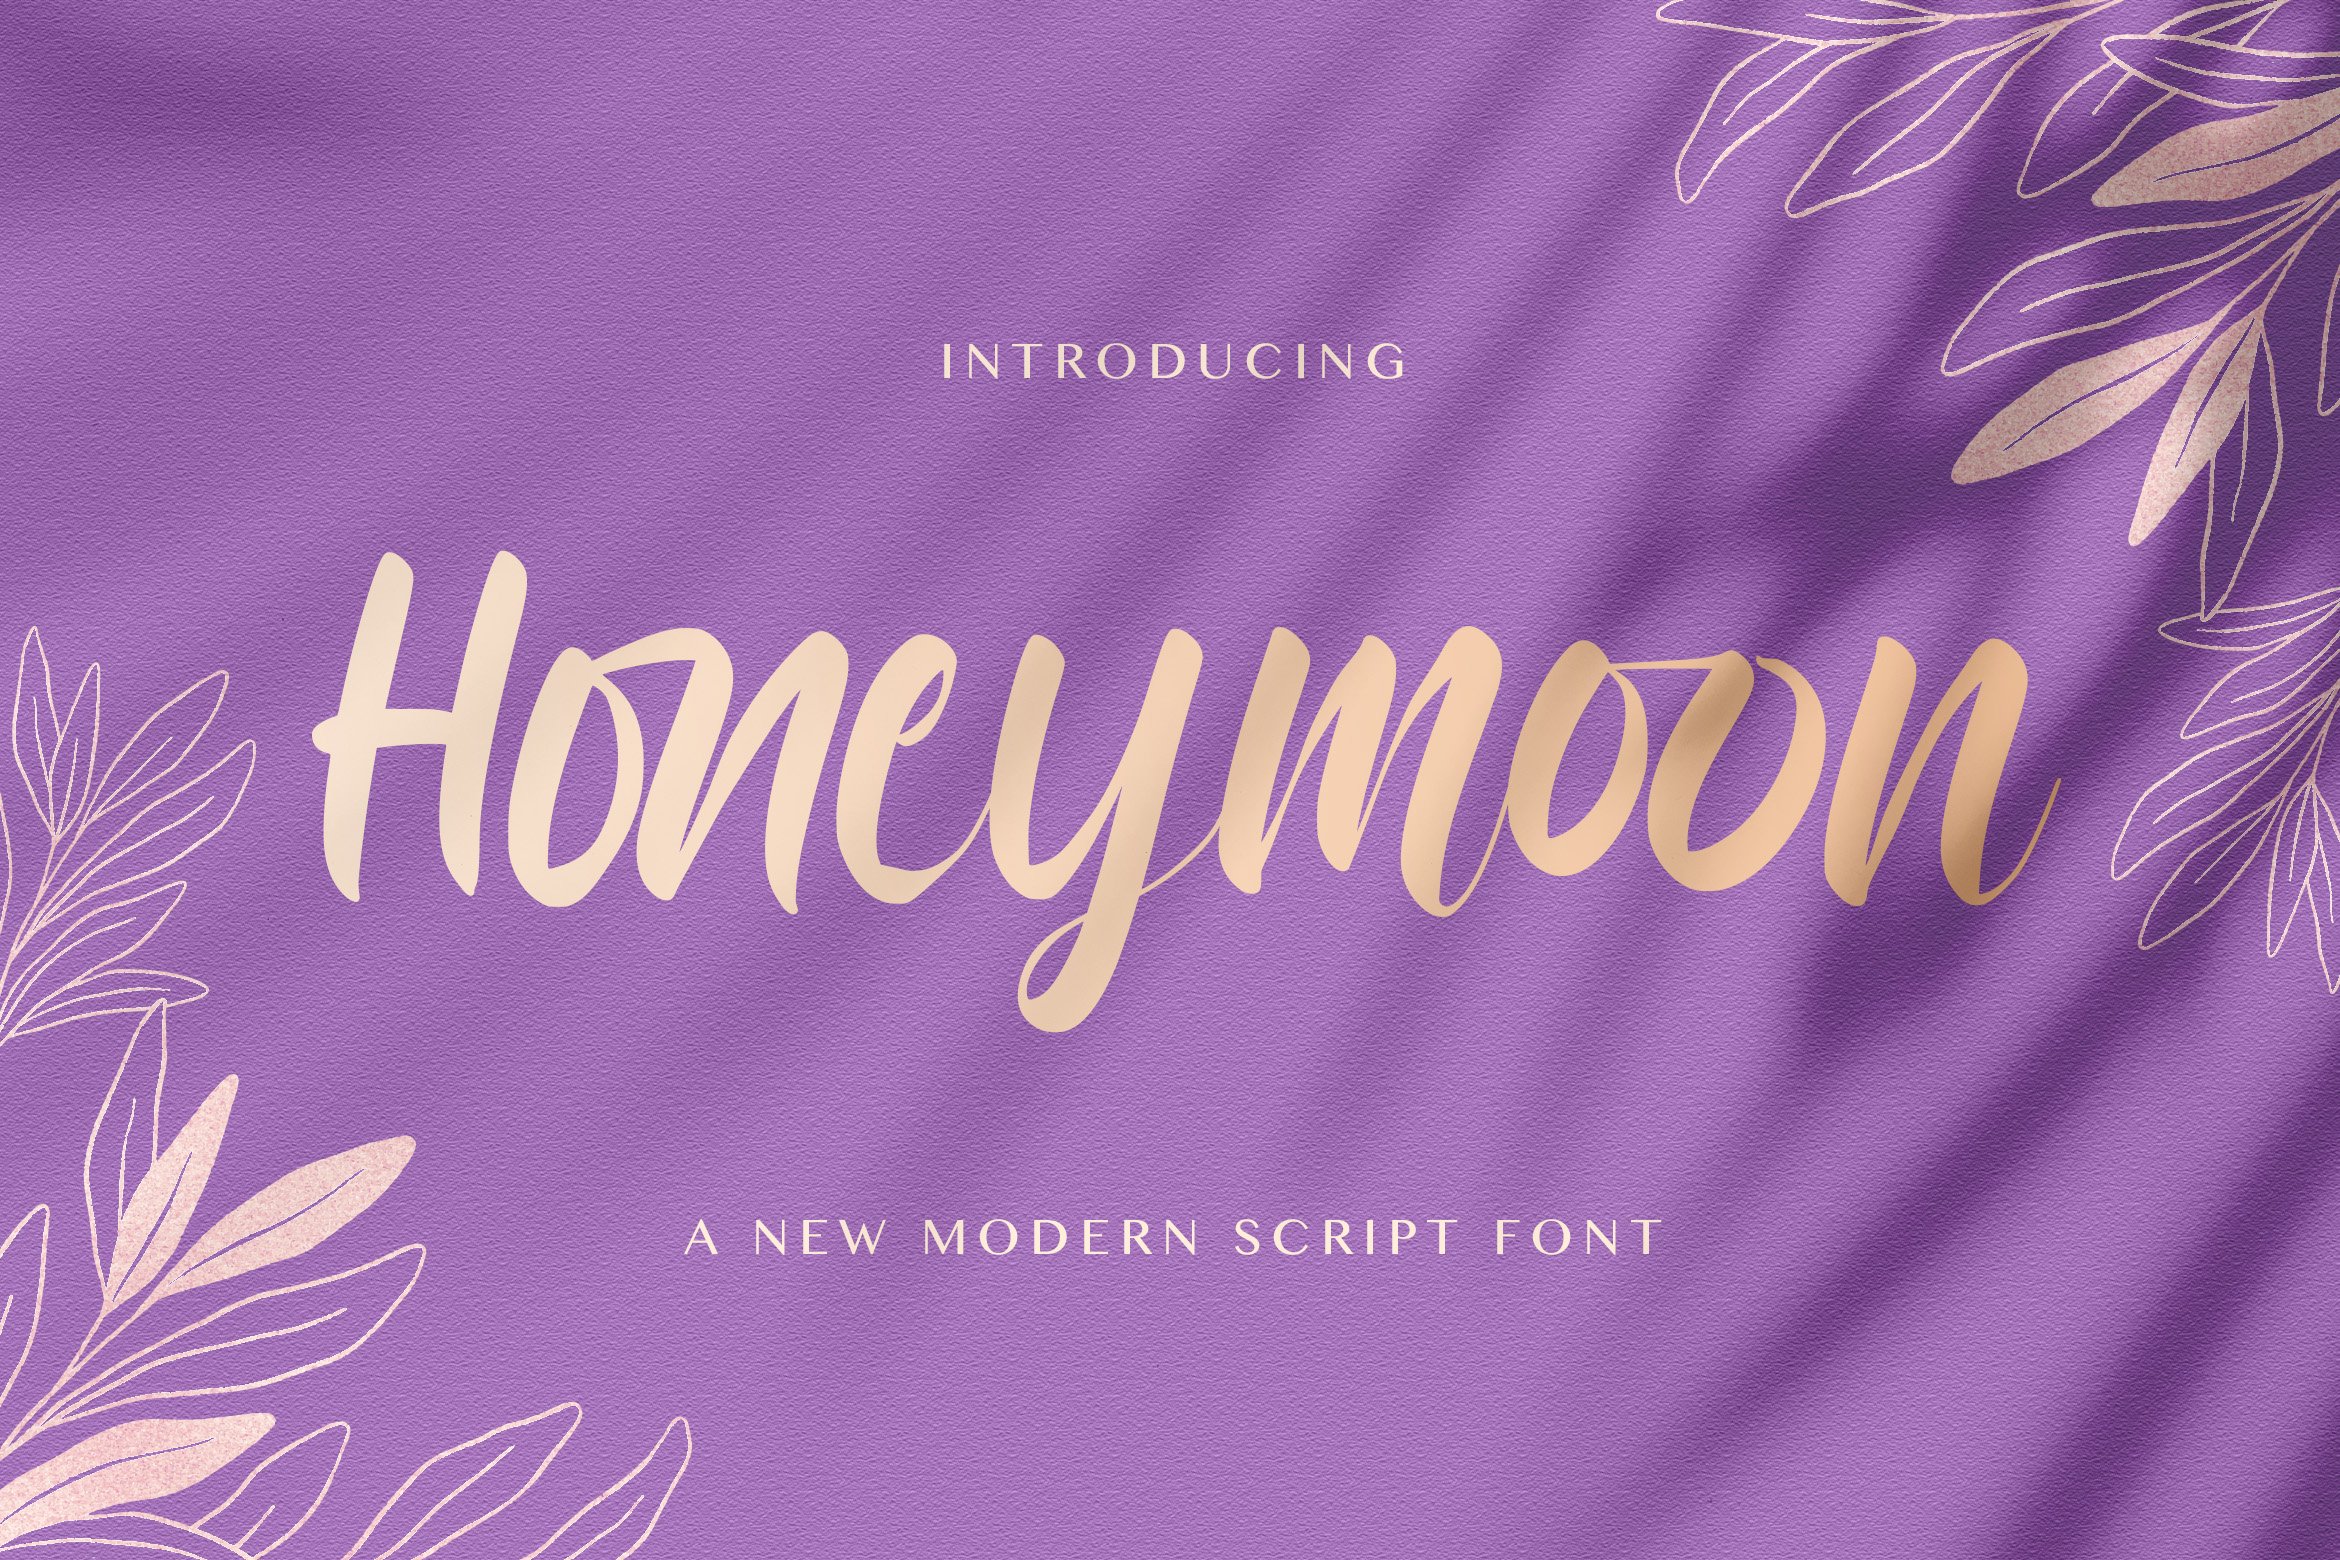 Honeymoon - Handwritten Font cover image.